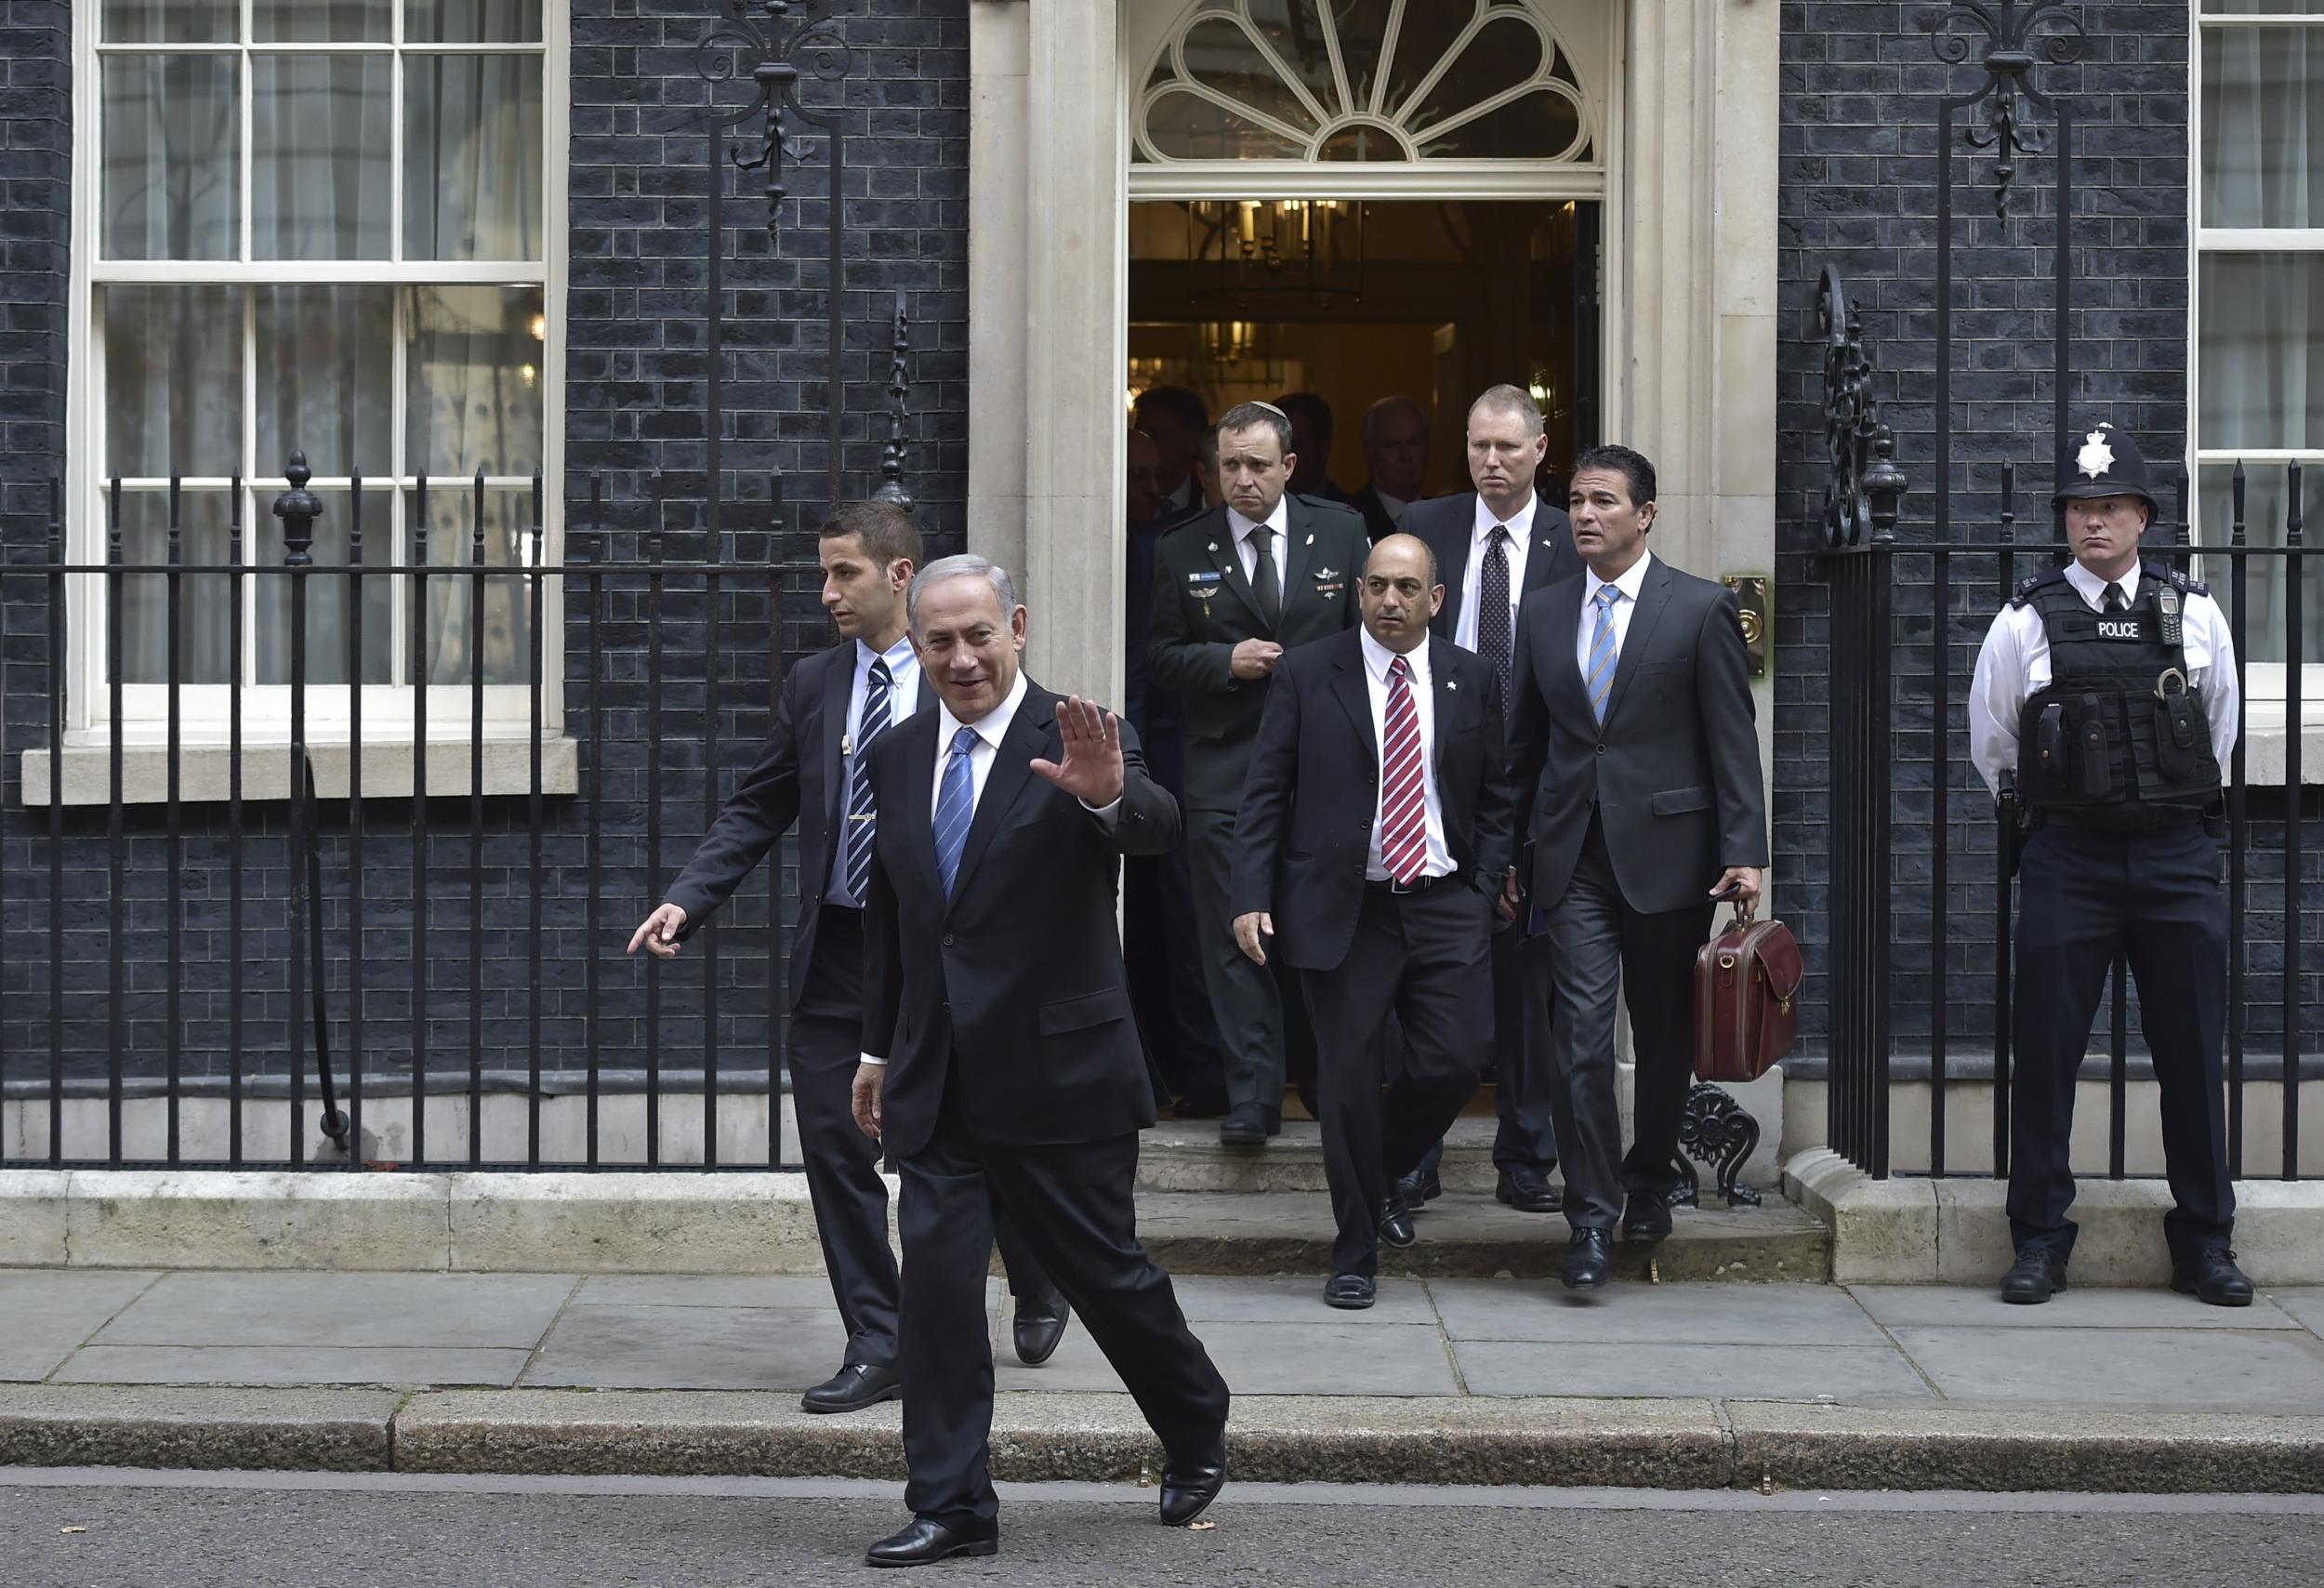 Israeli Prime Minister Benjamin Netanyahu is due to visit Theresa May Monday 6 February